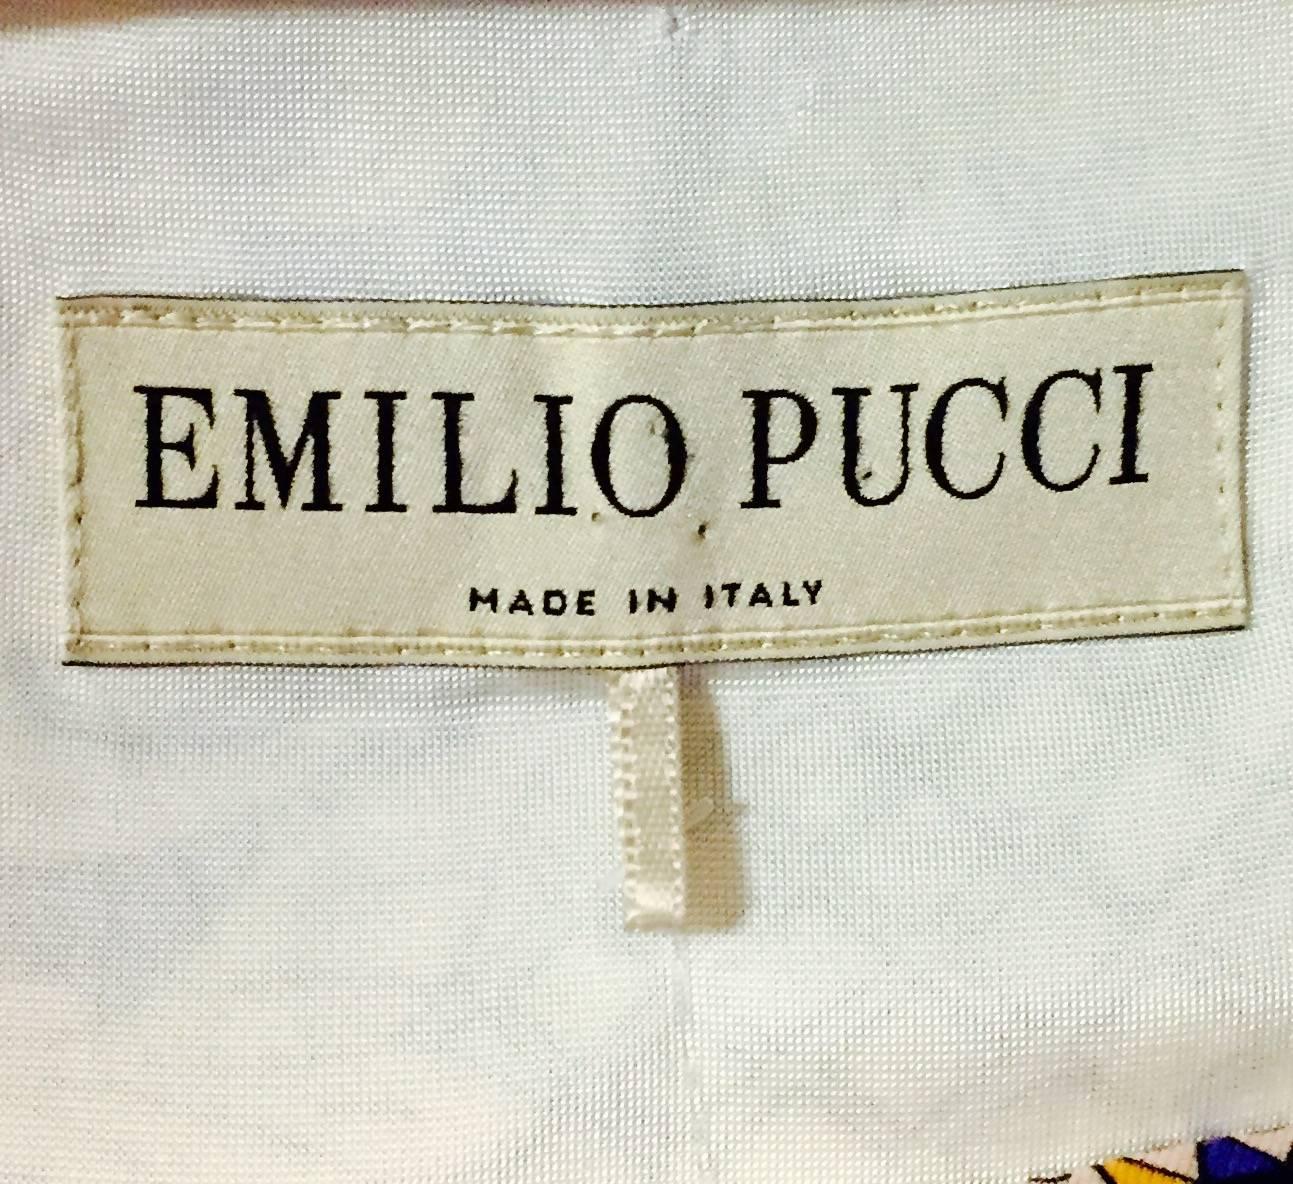 Emilio Pucci Silk Sheath With Circle Designs in Purple and Lavender For Sale 1